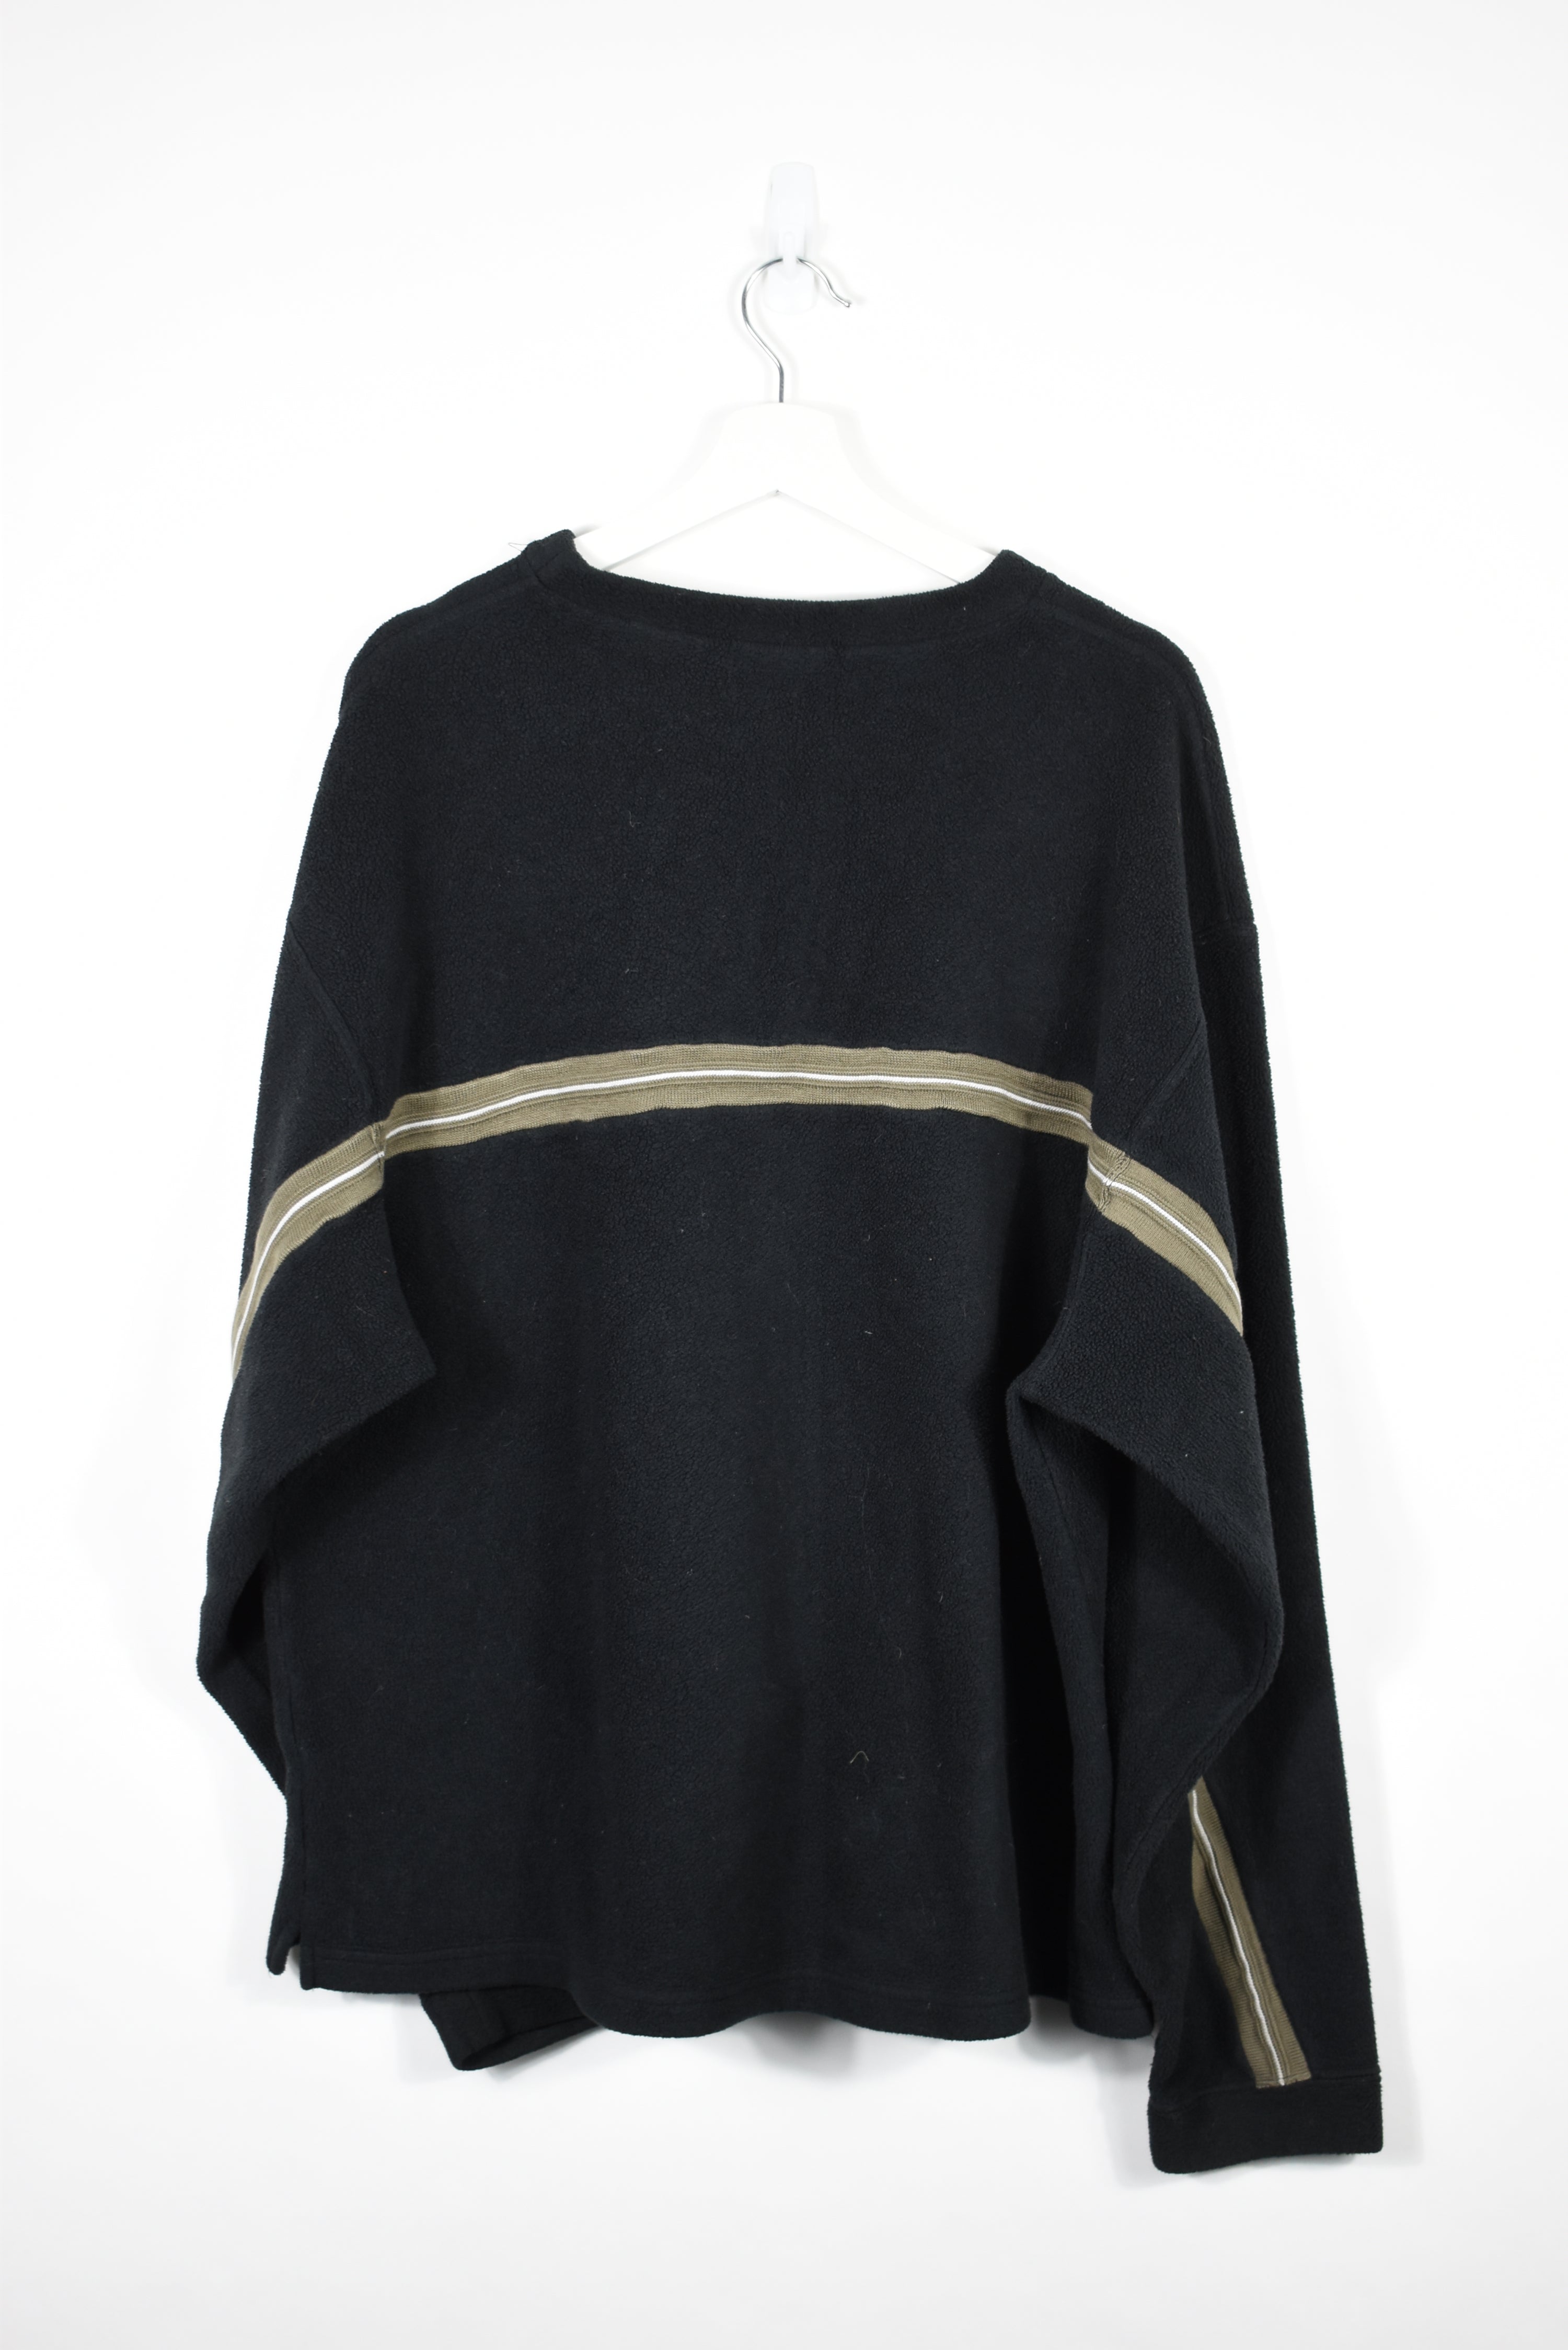 Vintage Timberland Polartec Fleece Sweatshirt XXL